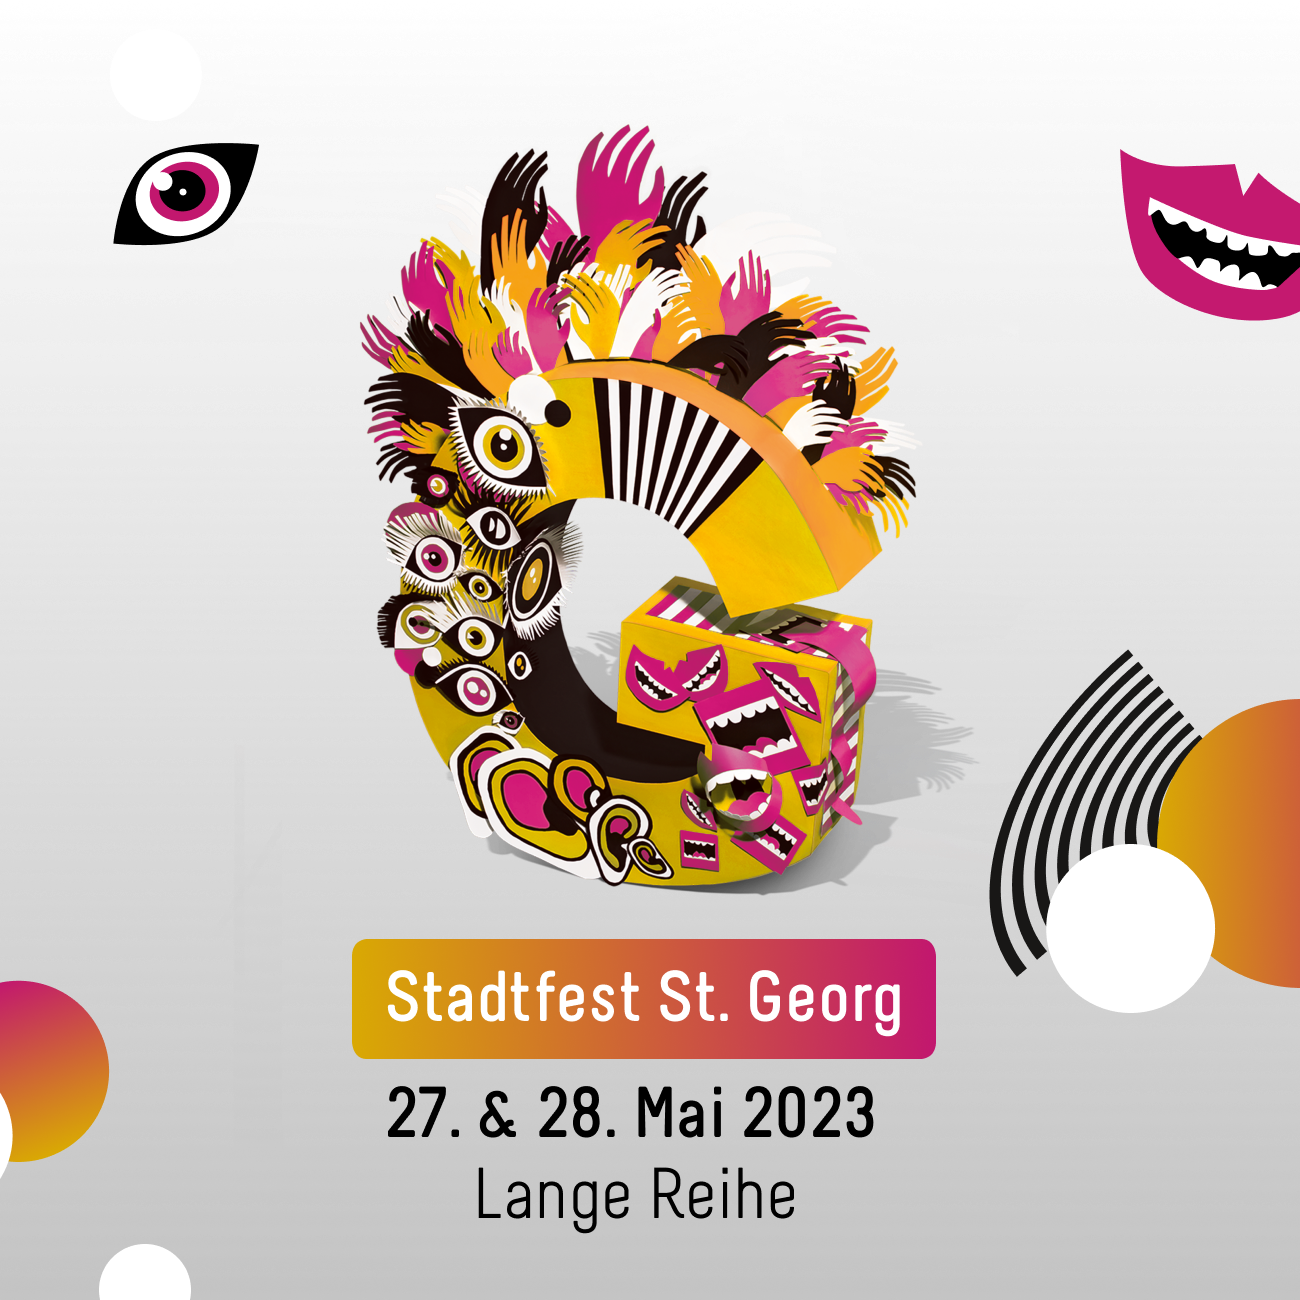 Stadtfest in St. Georg 27. & 28. Mai 2023